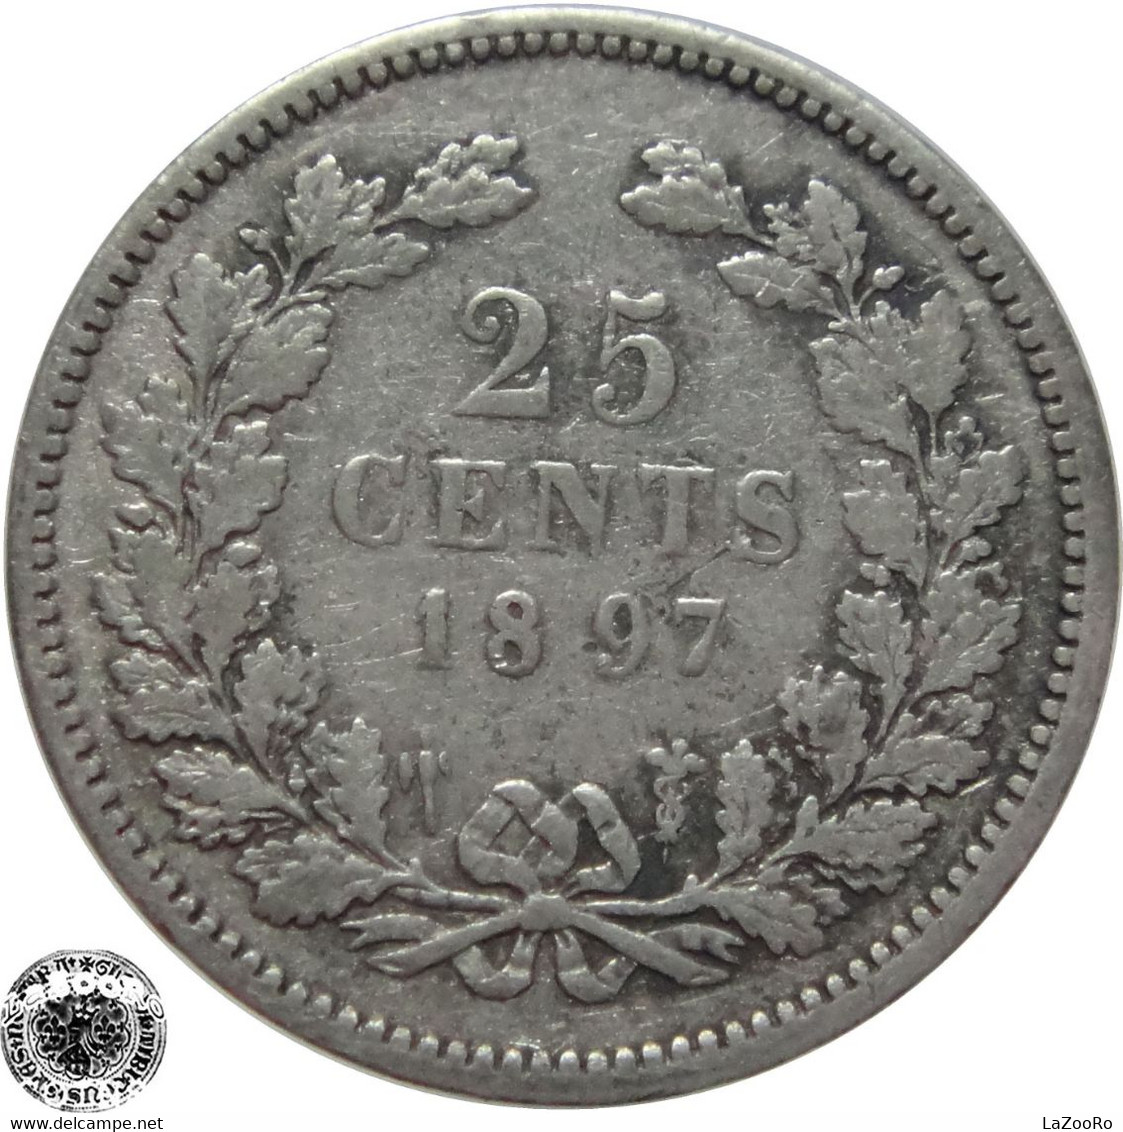 LaZooRo: Netherlands 25 Cents 1897 VF / XF - Silver - 25 Centavos